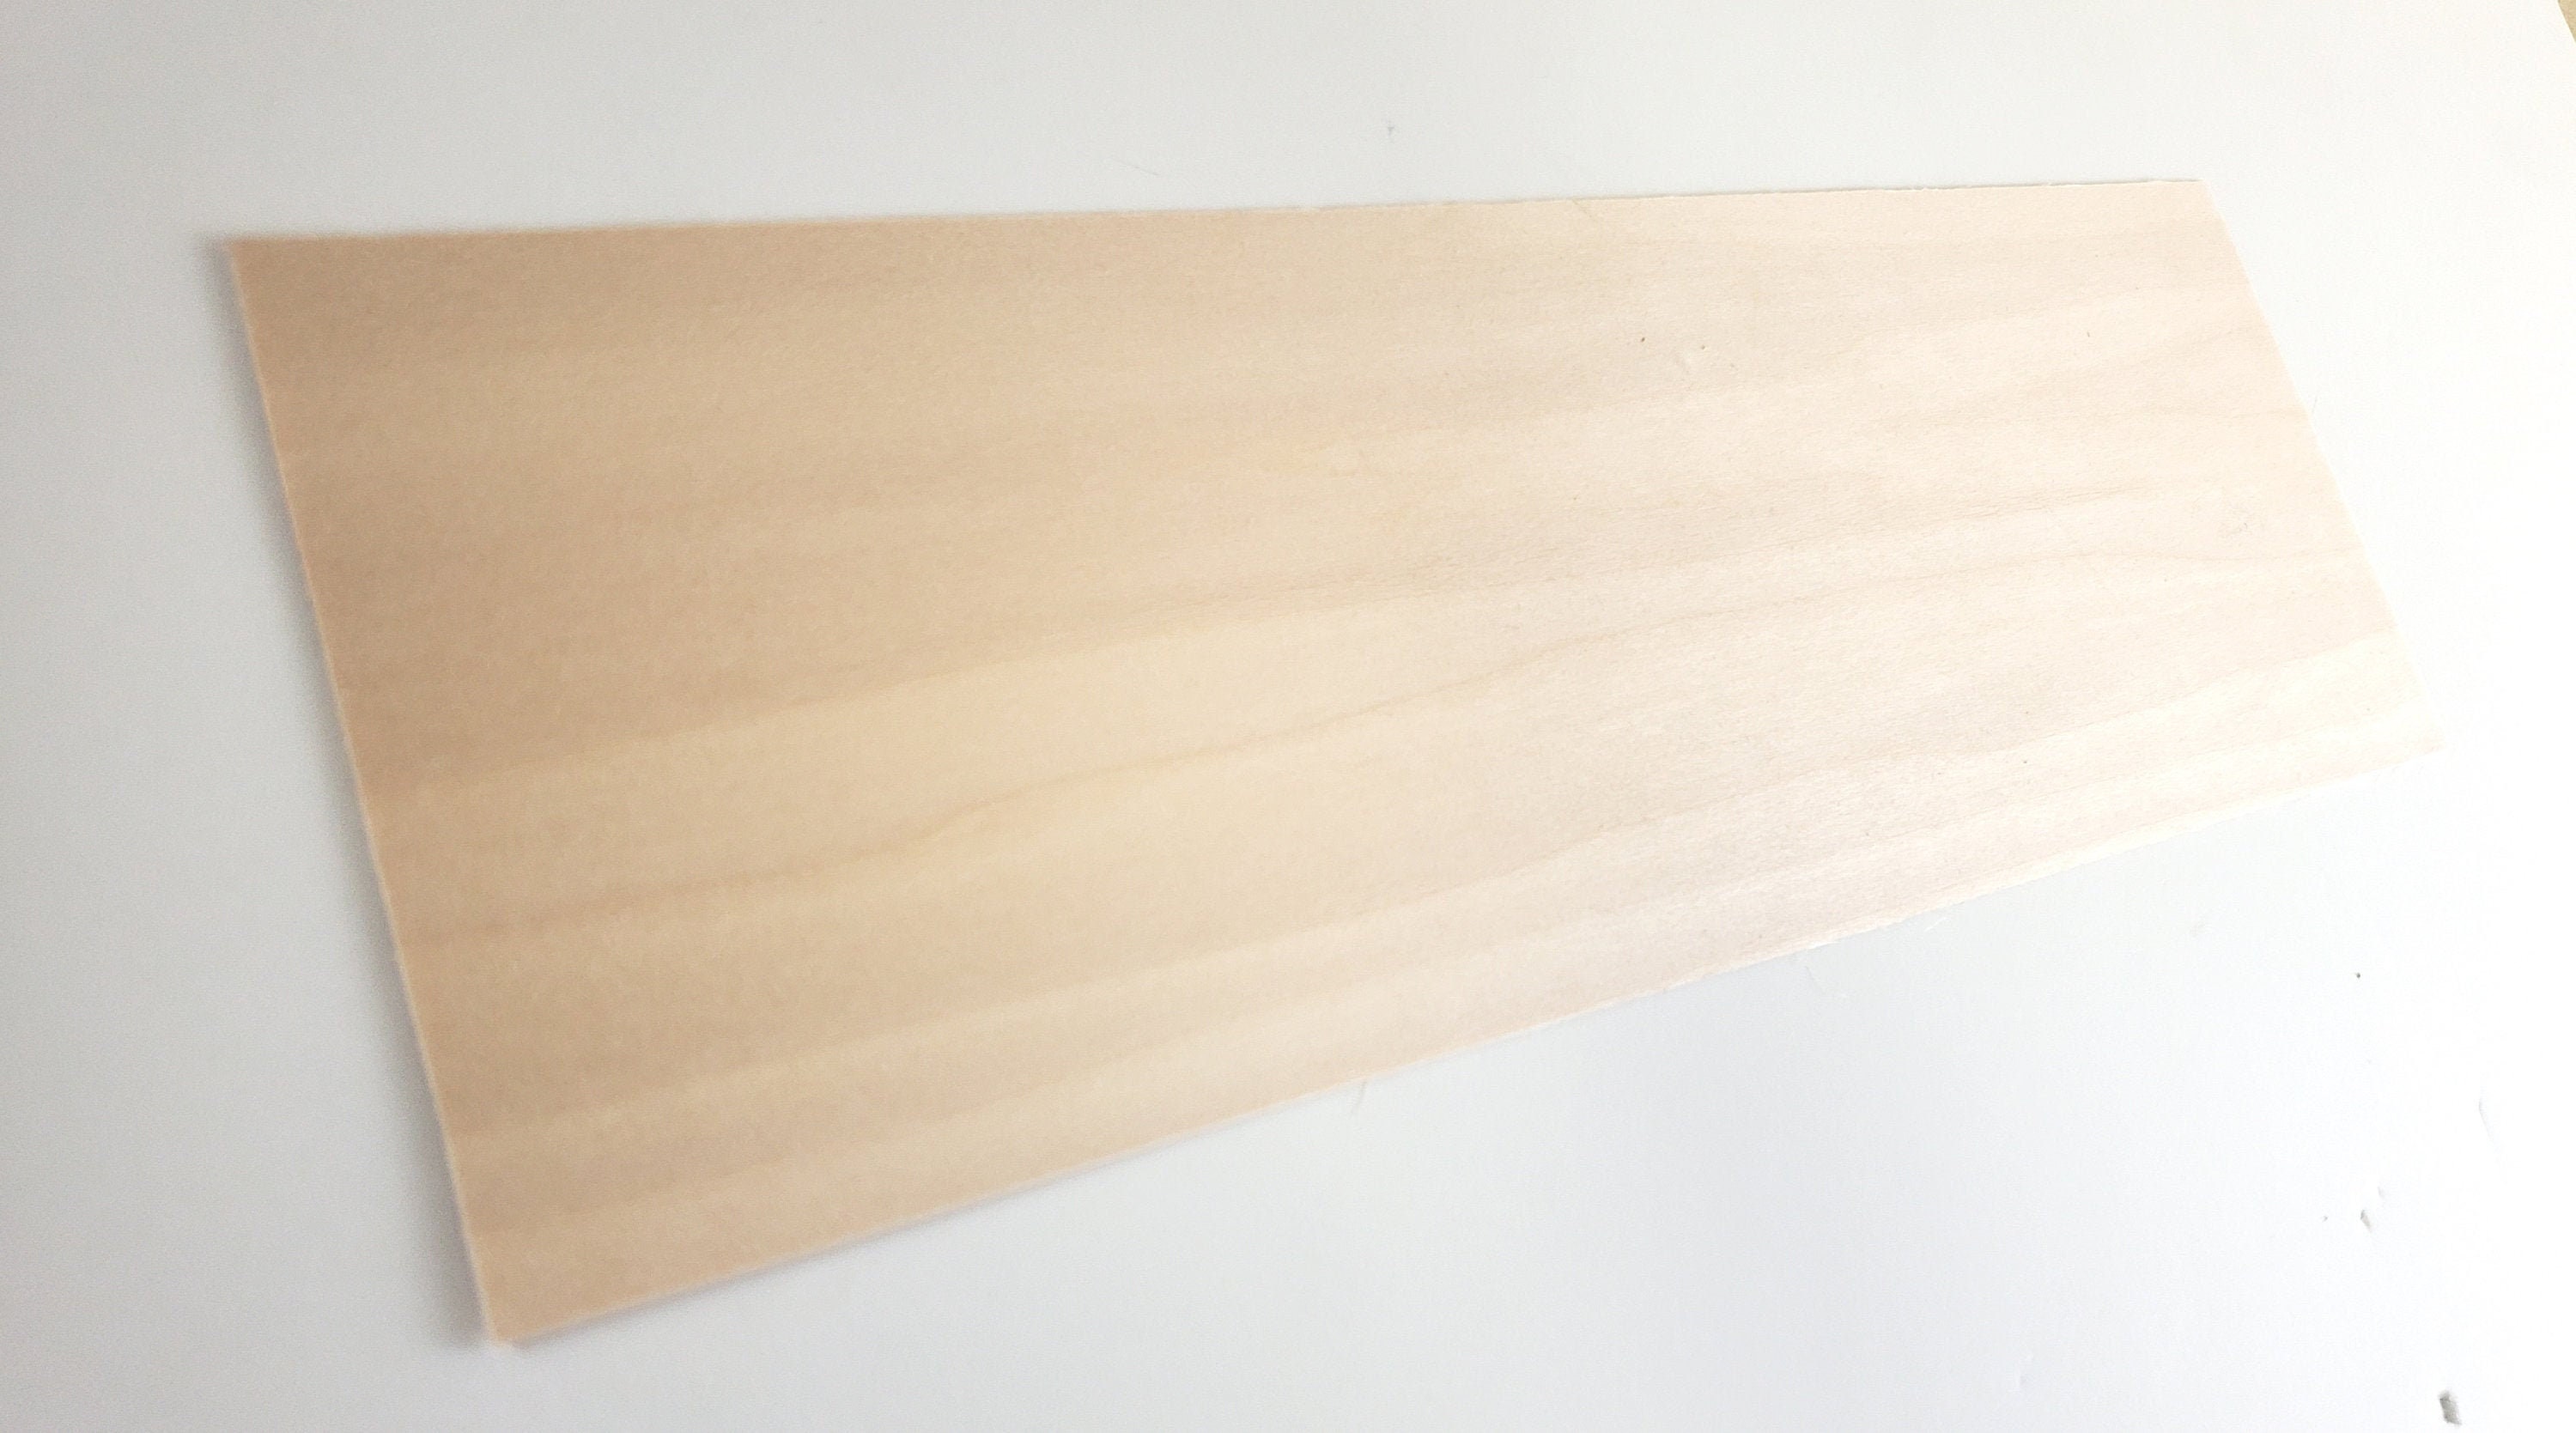 LISHINE 16 Pcs 1/8 Inch Balsa Wood Sheet 12 x 8, 3mm Thin Balsa Wood –  WoodArtSupply